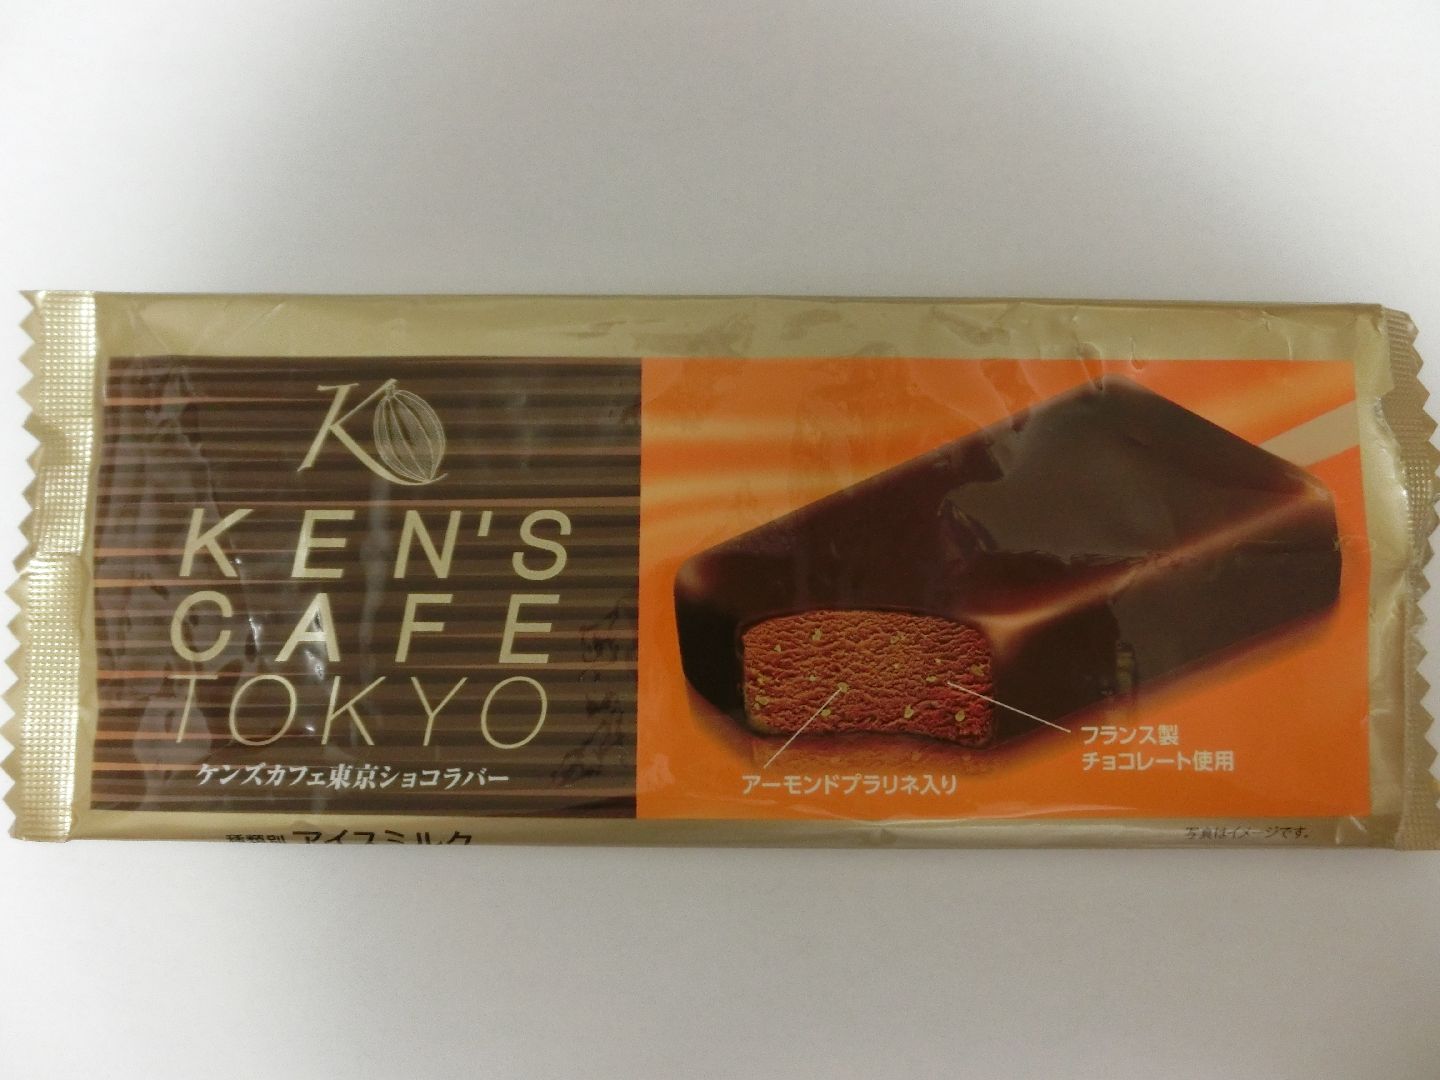 seriaroile_kens_cafe_tokyo_chocolate_bar_f1.jpg